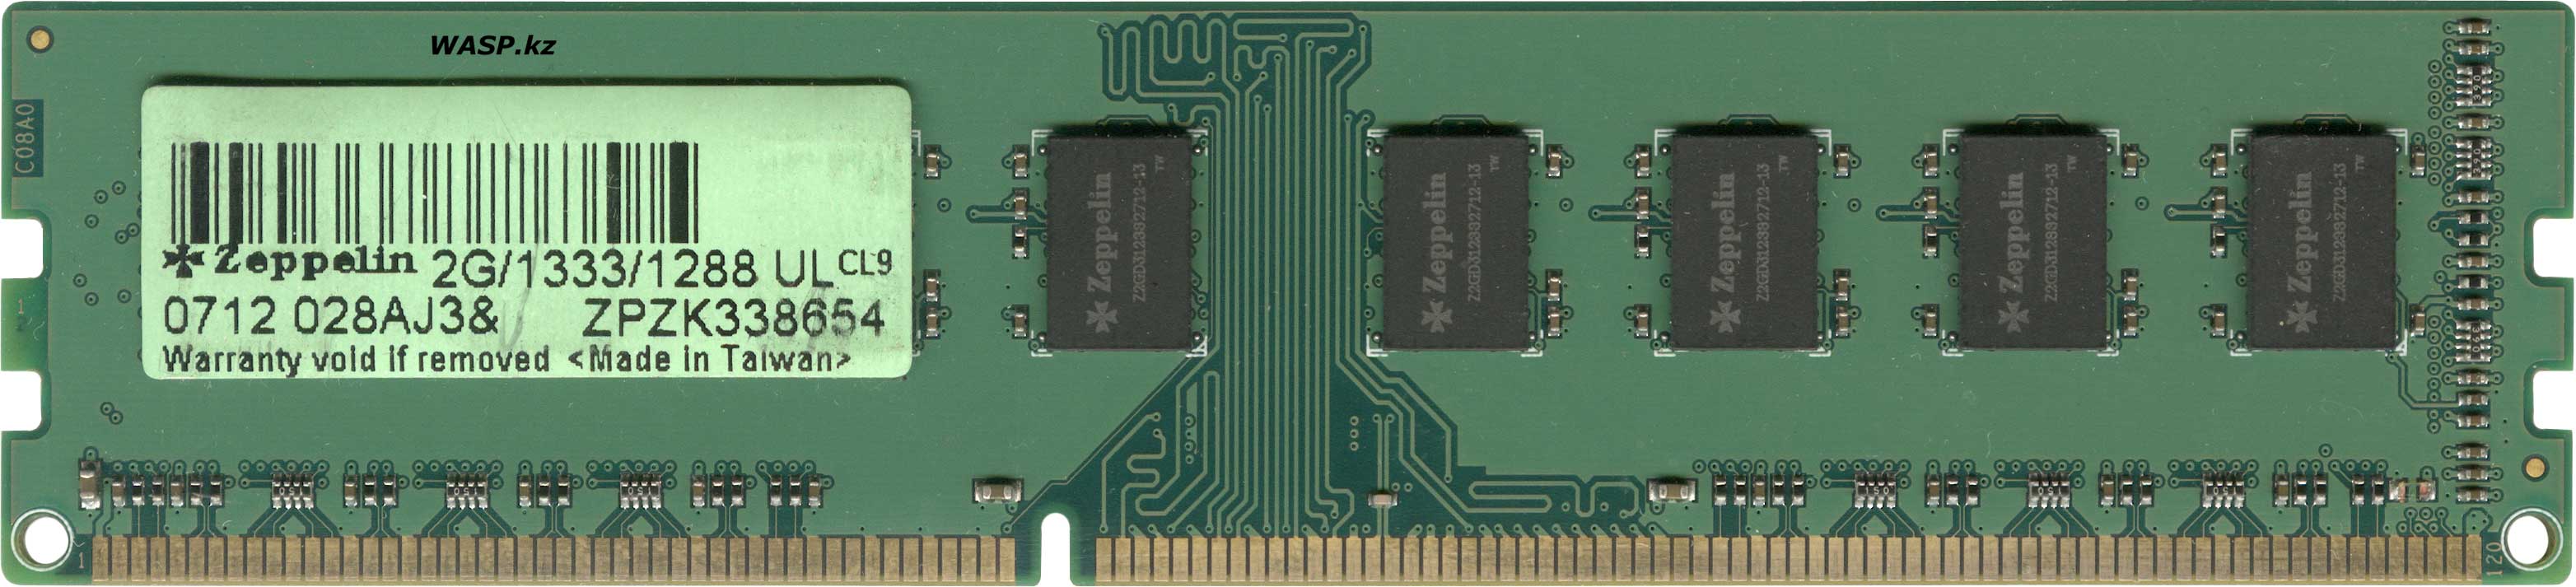 Zeppelin 2G/1333/1288 UL CL9 обзор оперативной памяти DDR3